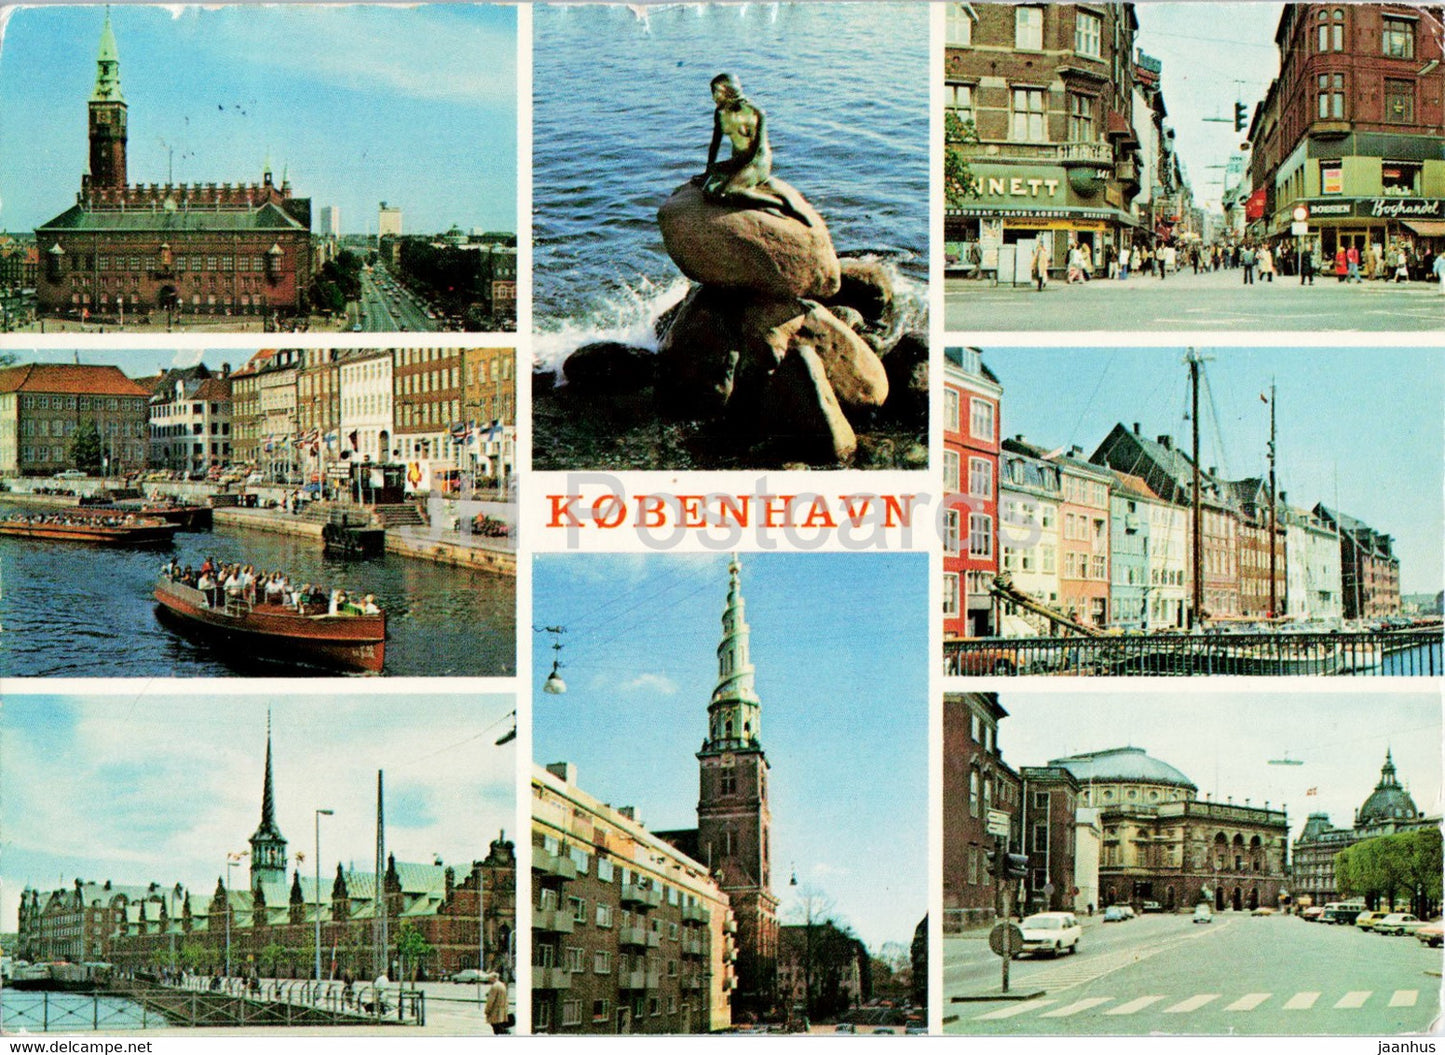 Copenhagen - multiview - city views - 1977 - Denmark - used - JH Postcards